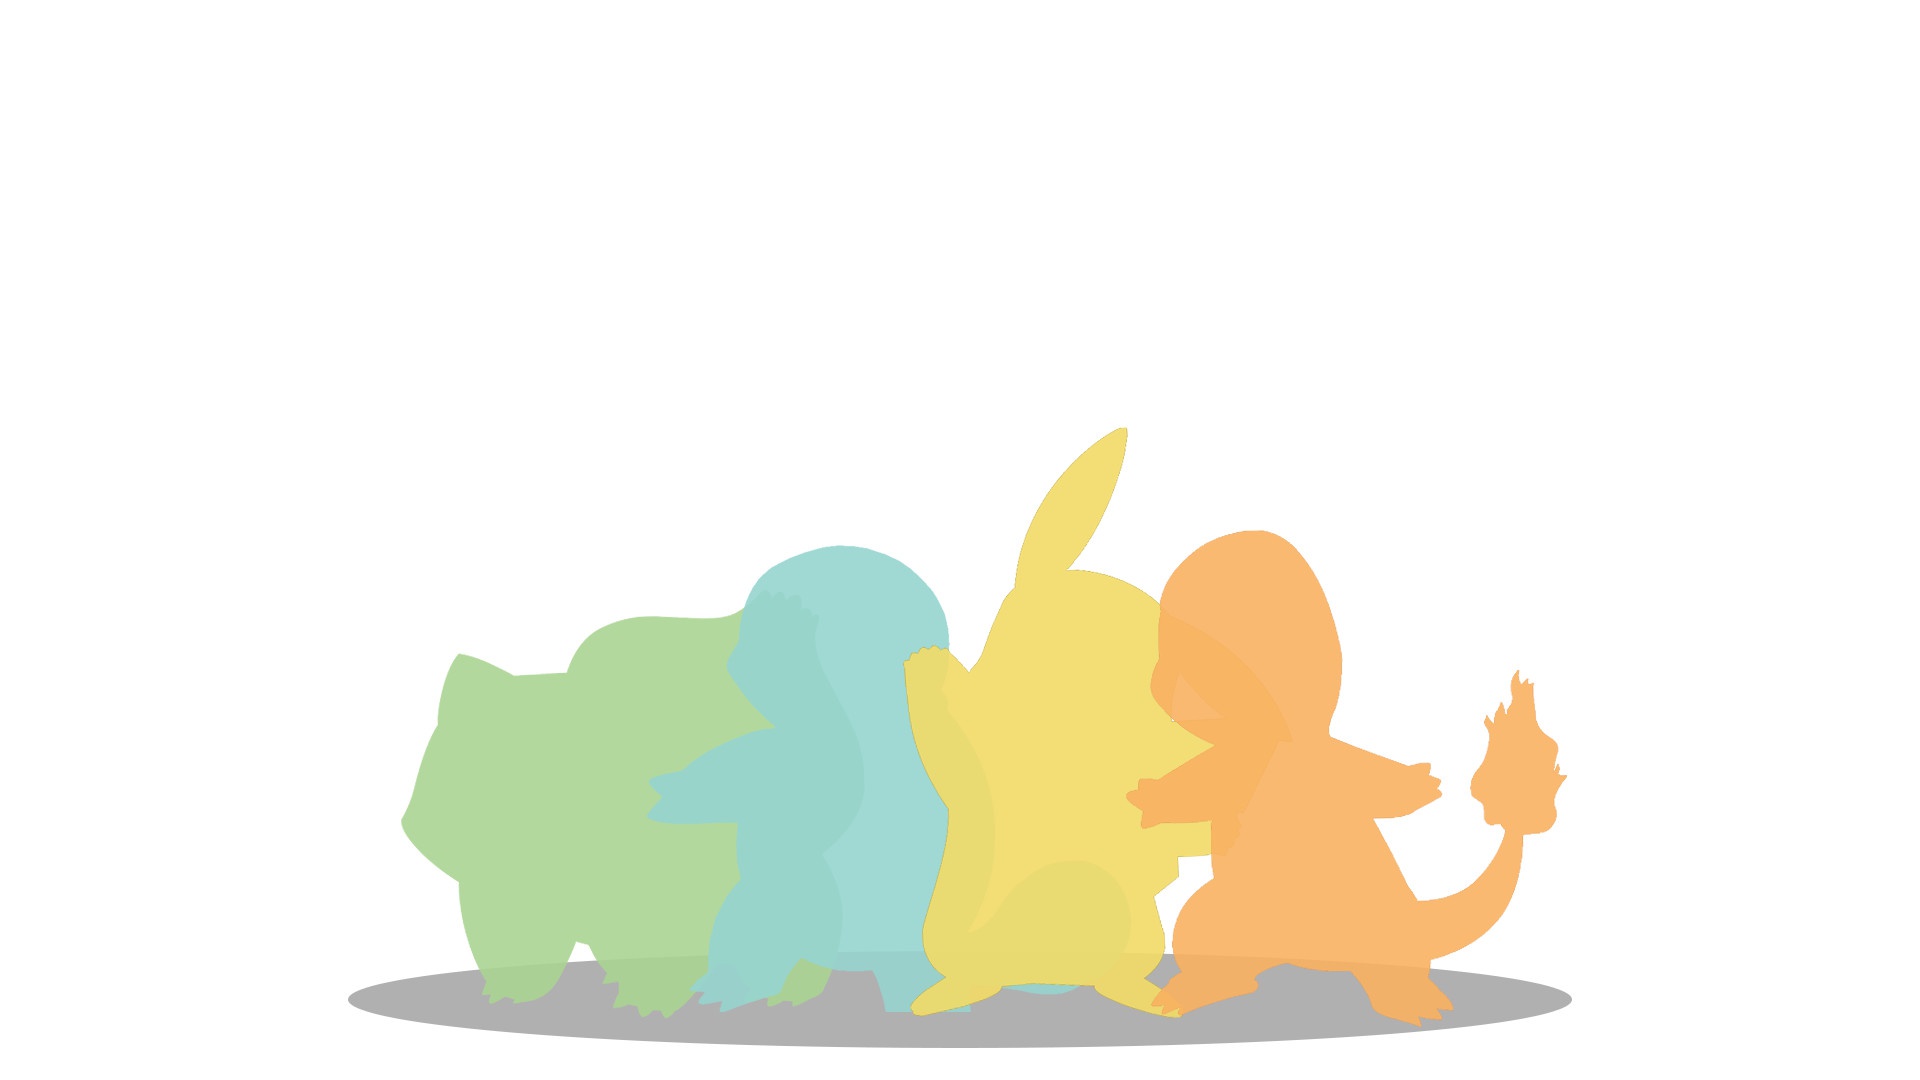 Baixar papel de parede para celular de Anime, Pokémon, Minimalista, Pikachu, Bulbasaur (Pokémon), Charmander (Pokémon), Squirtle (Pokémon) gratuito.